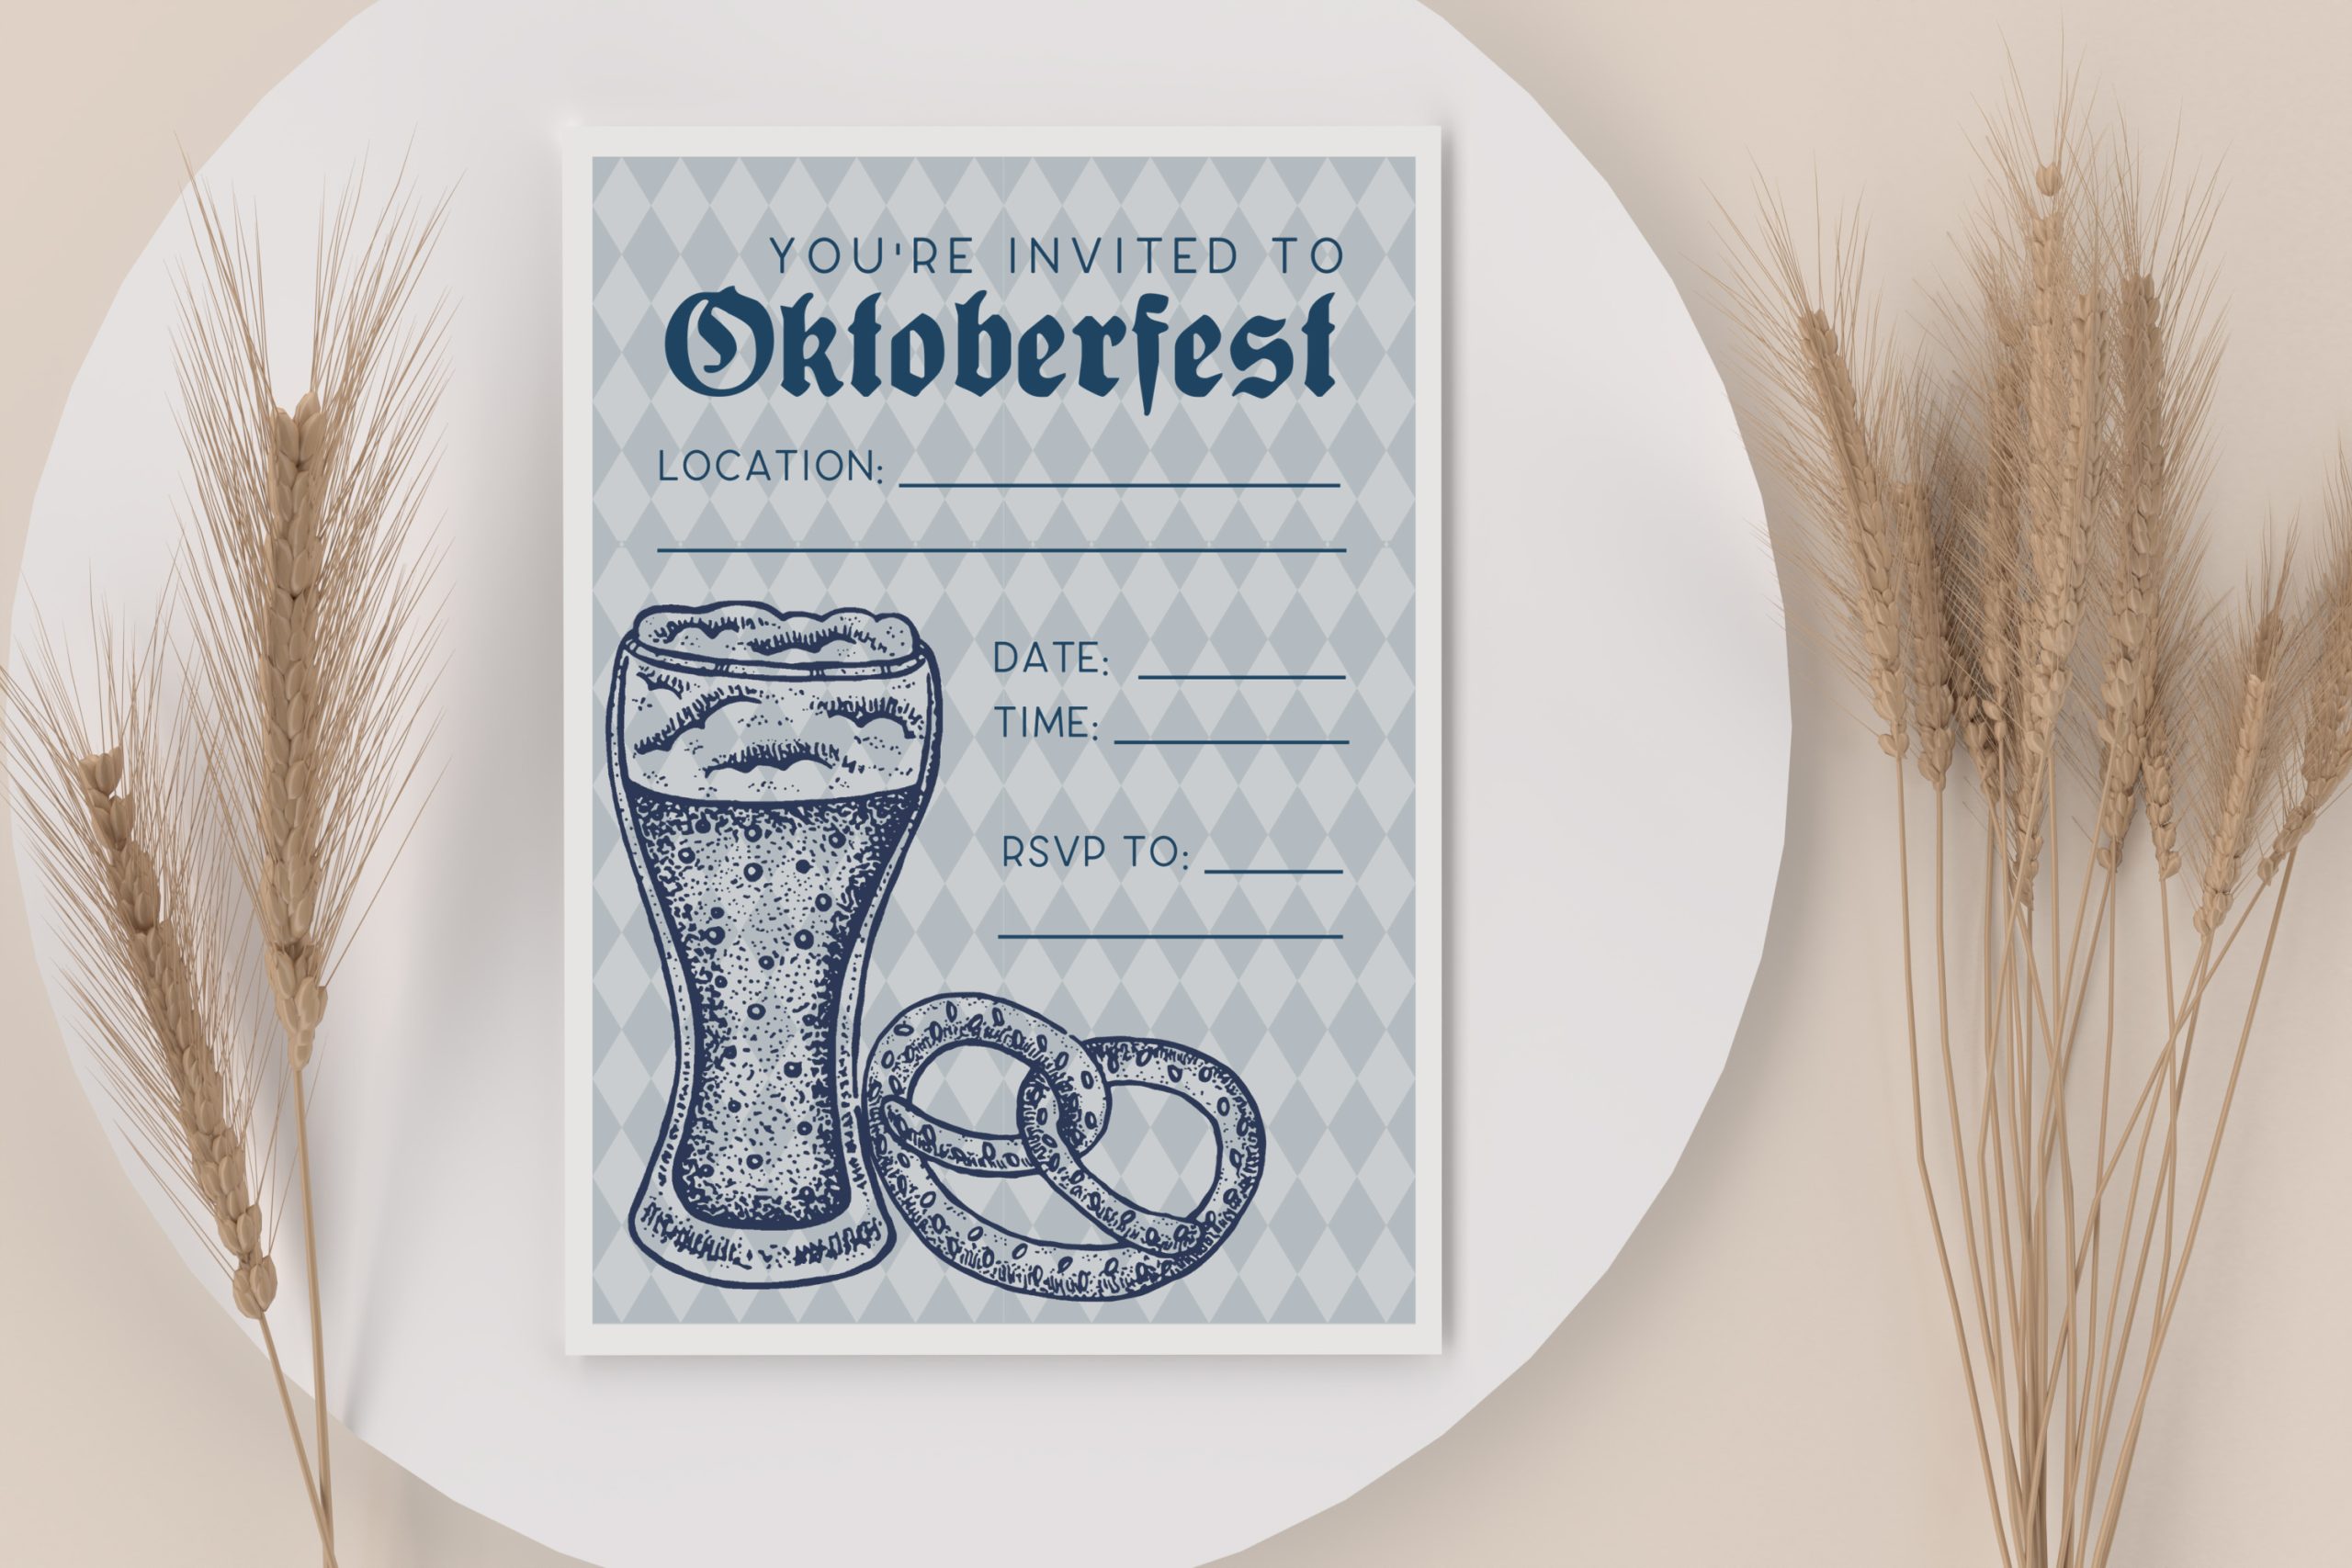 Oktoberfest invitation on a white plate by wheat